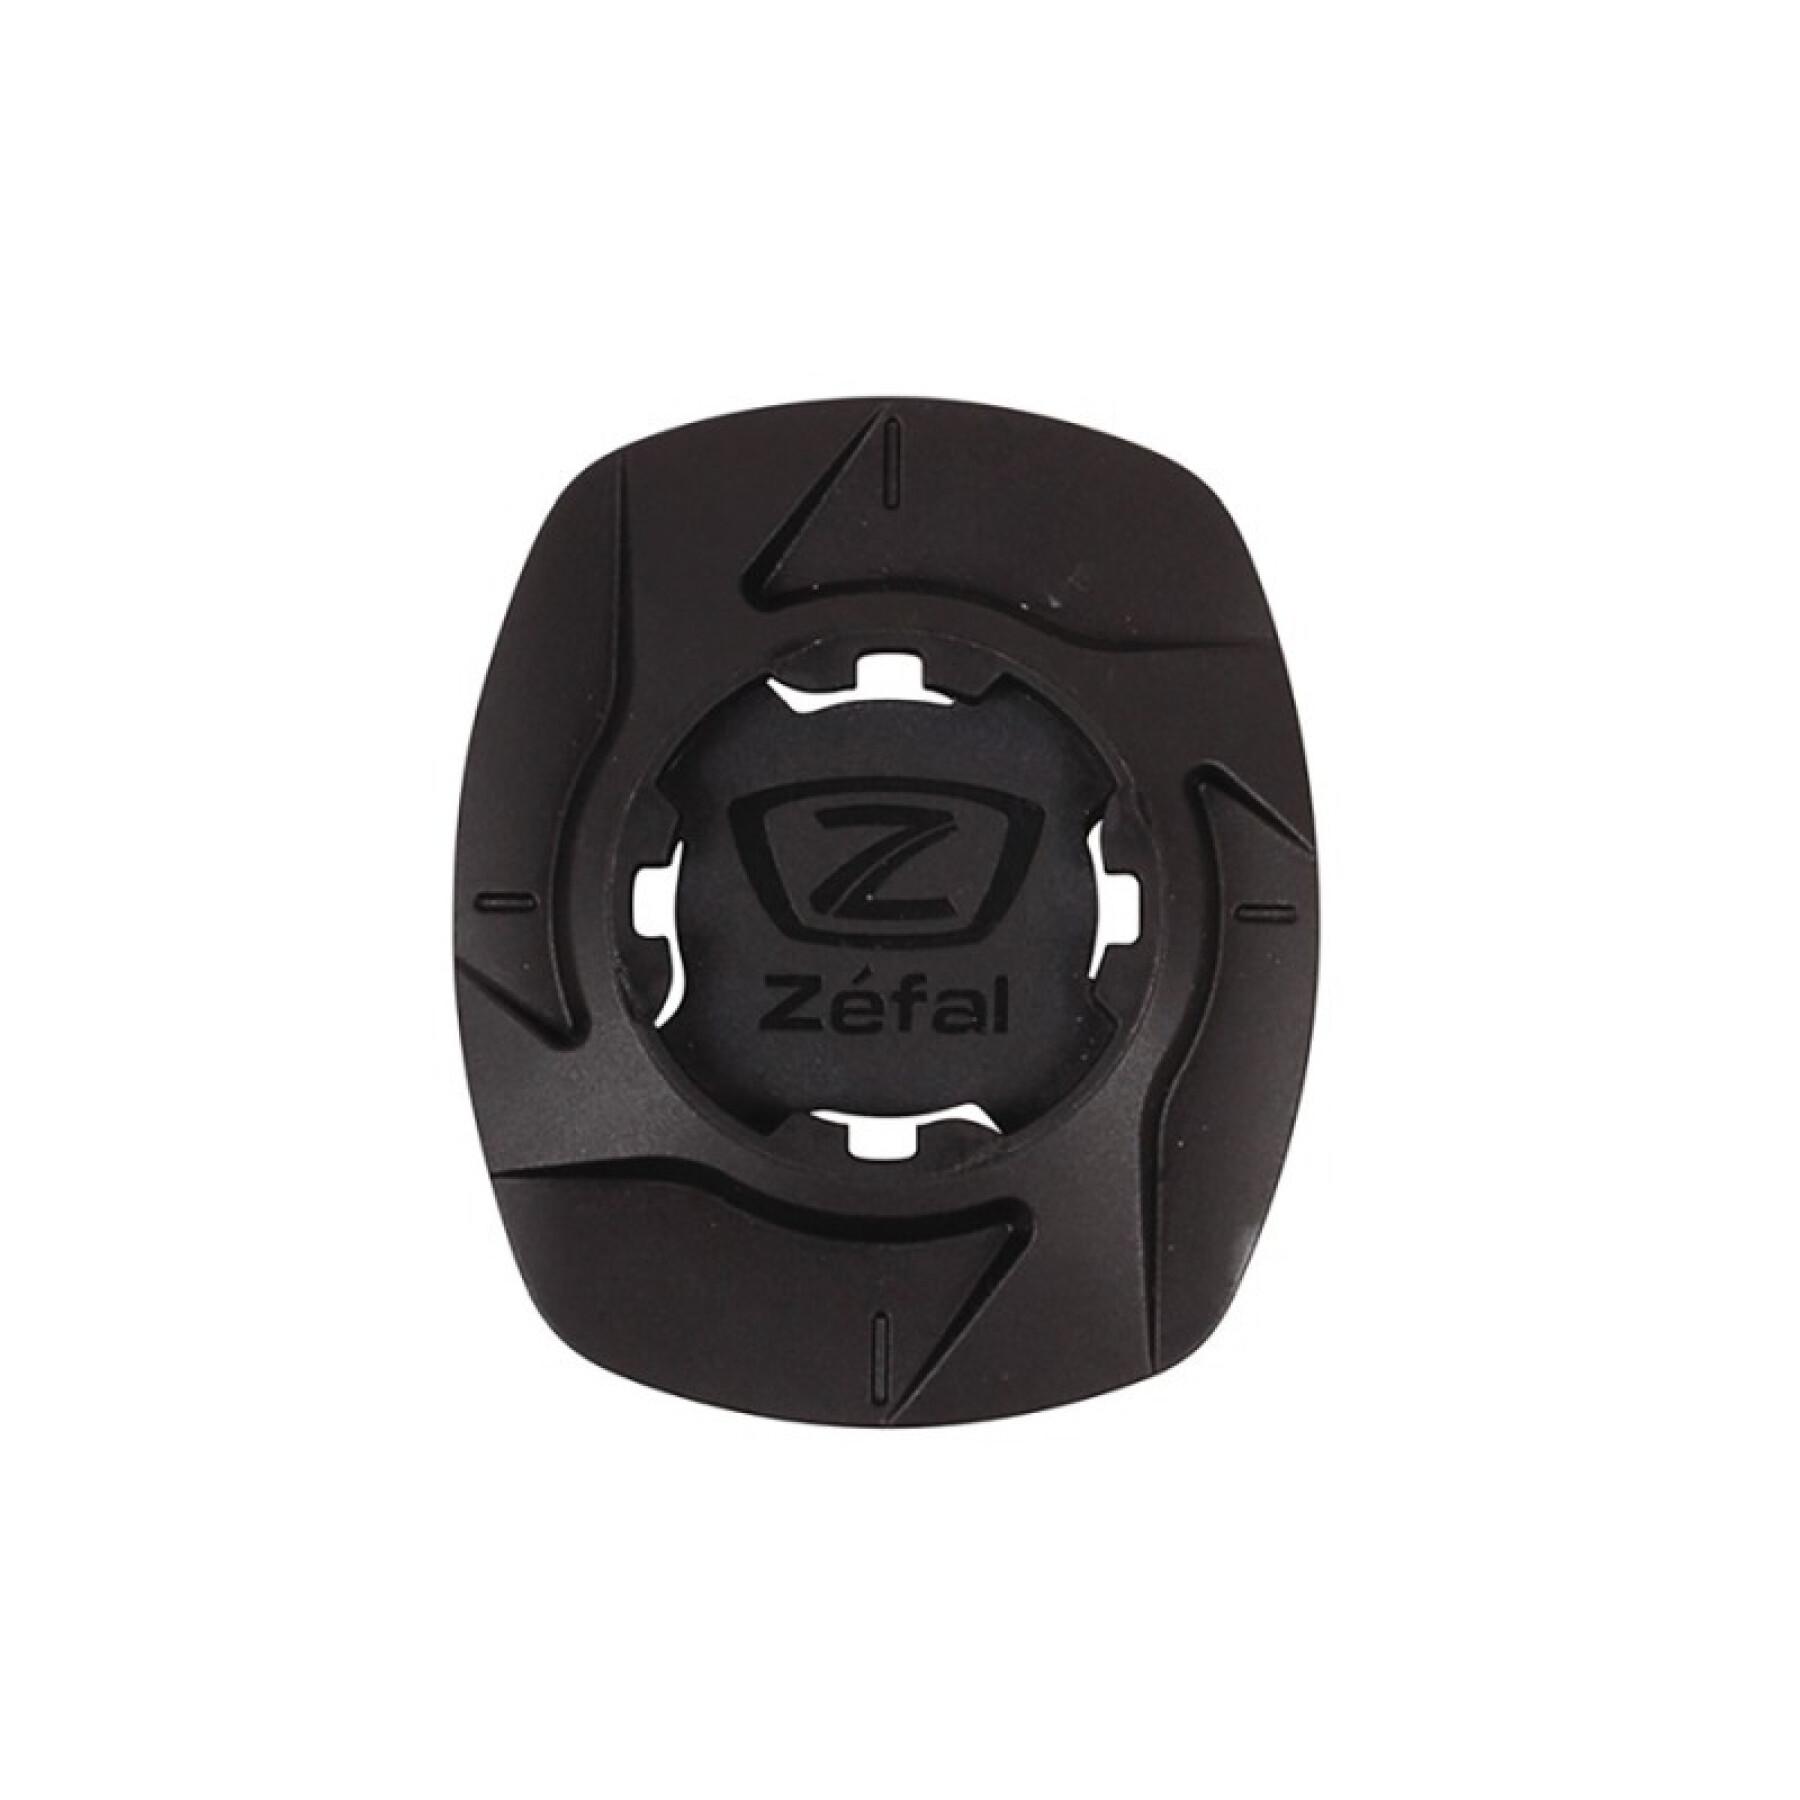 Universal smartphone adapter for mounts Zefal bike/handlebar/armand/car mount